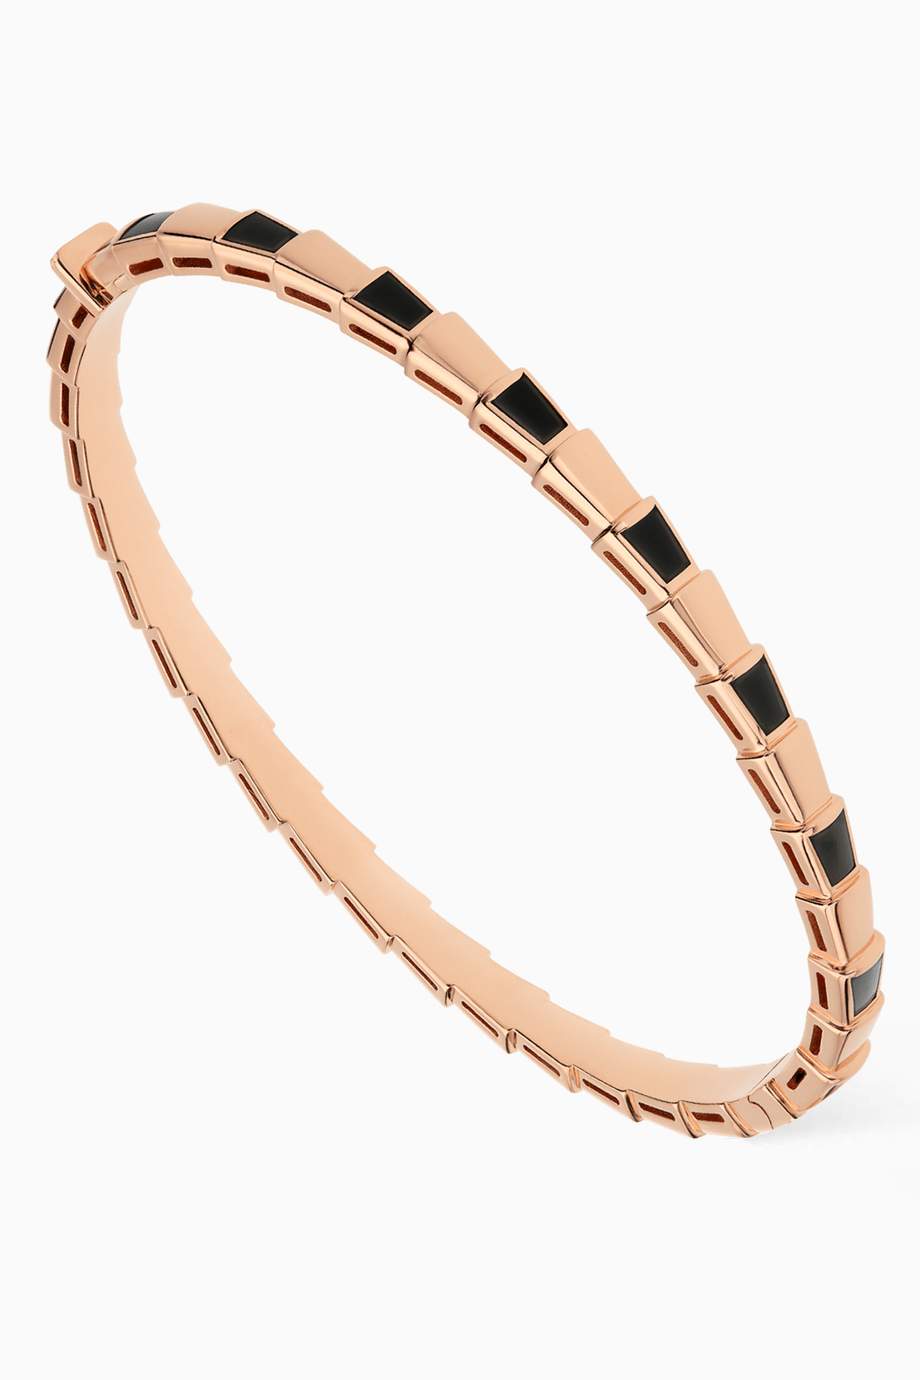 Shop Bvlgari Rose Gold Serpenti Viper Onyx Bracelet For